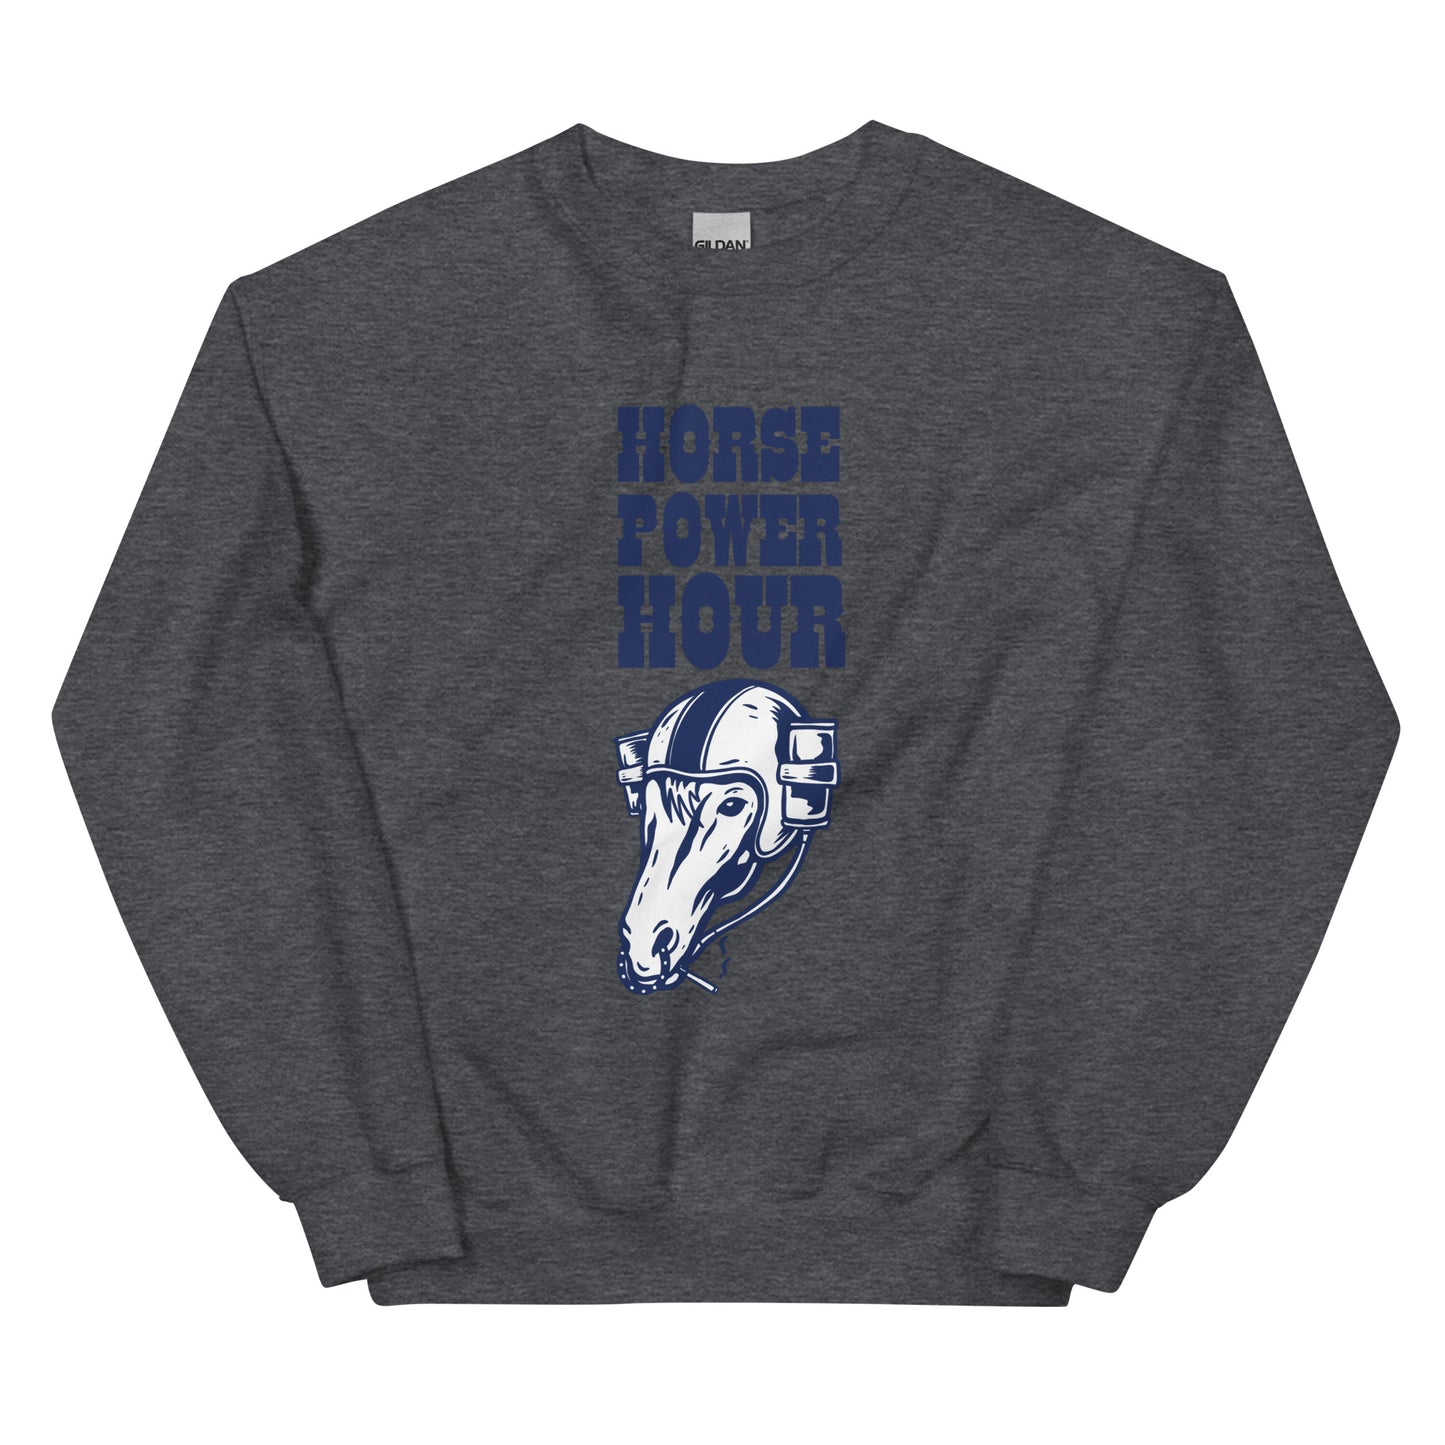 Horse Power Hour Sweatshirt